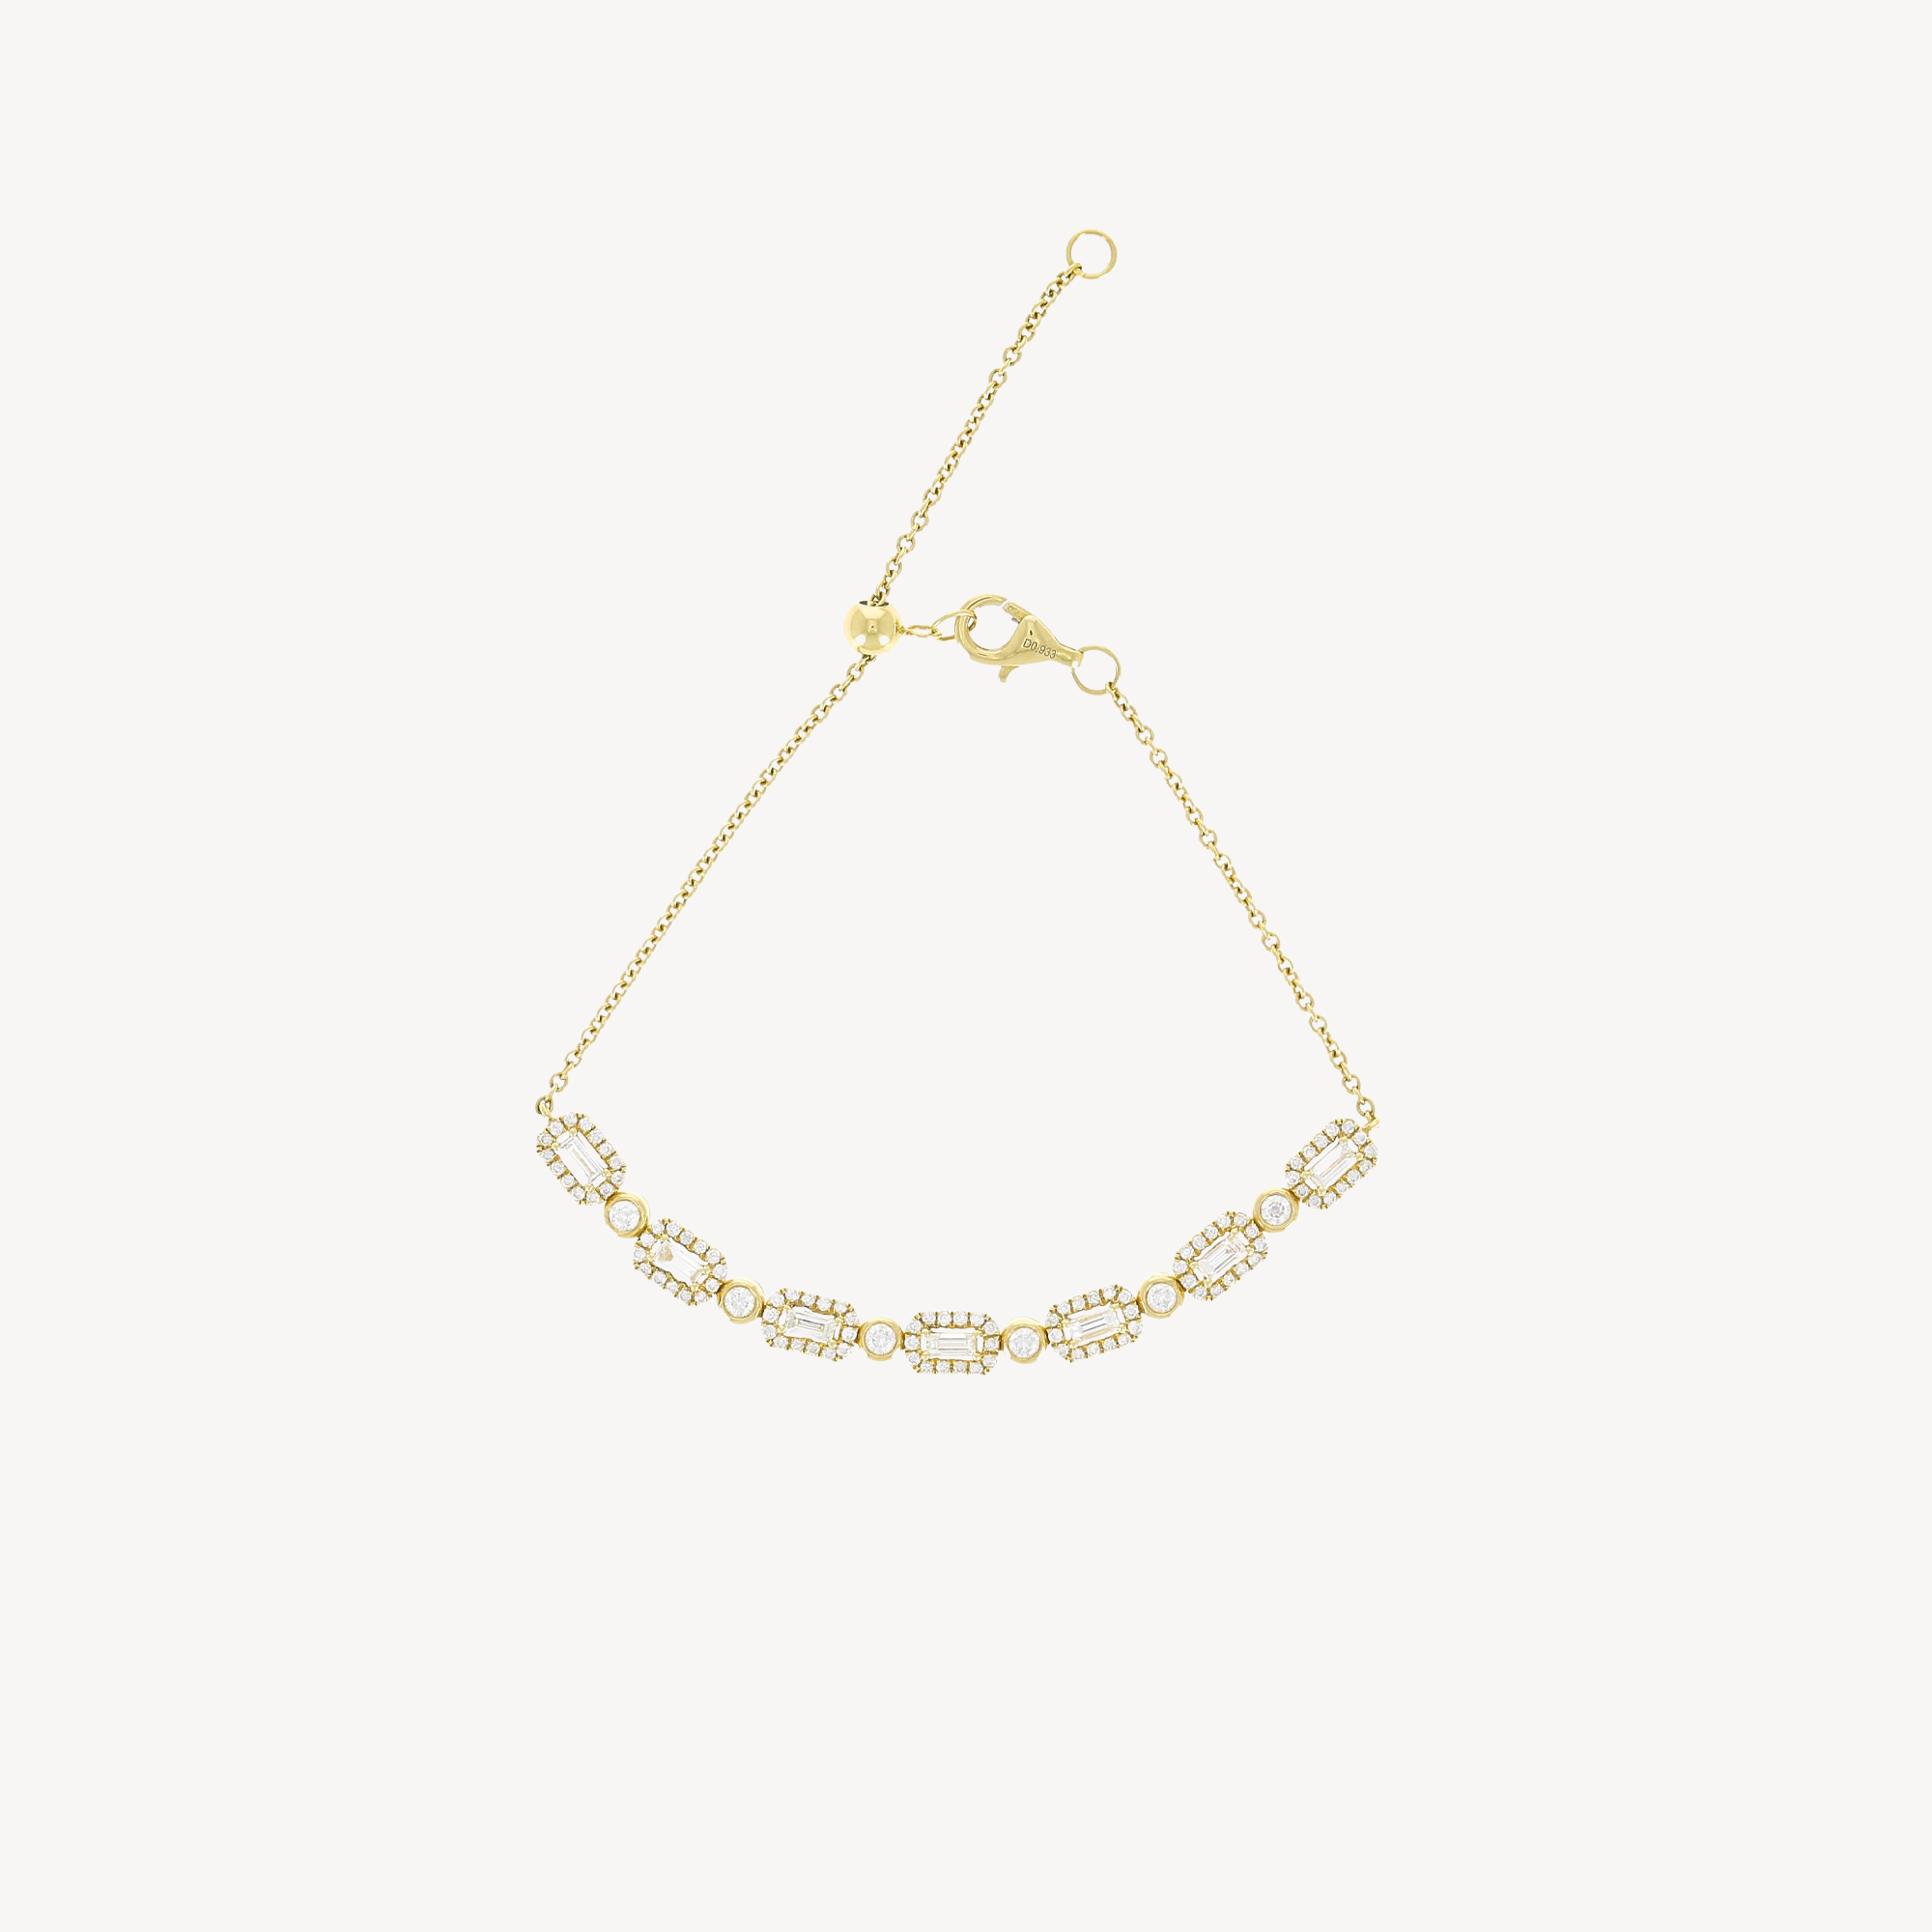 Bracelet Adjustable Chain with 5 Links